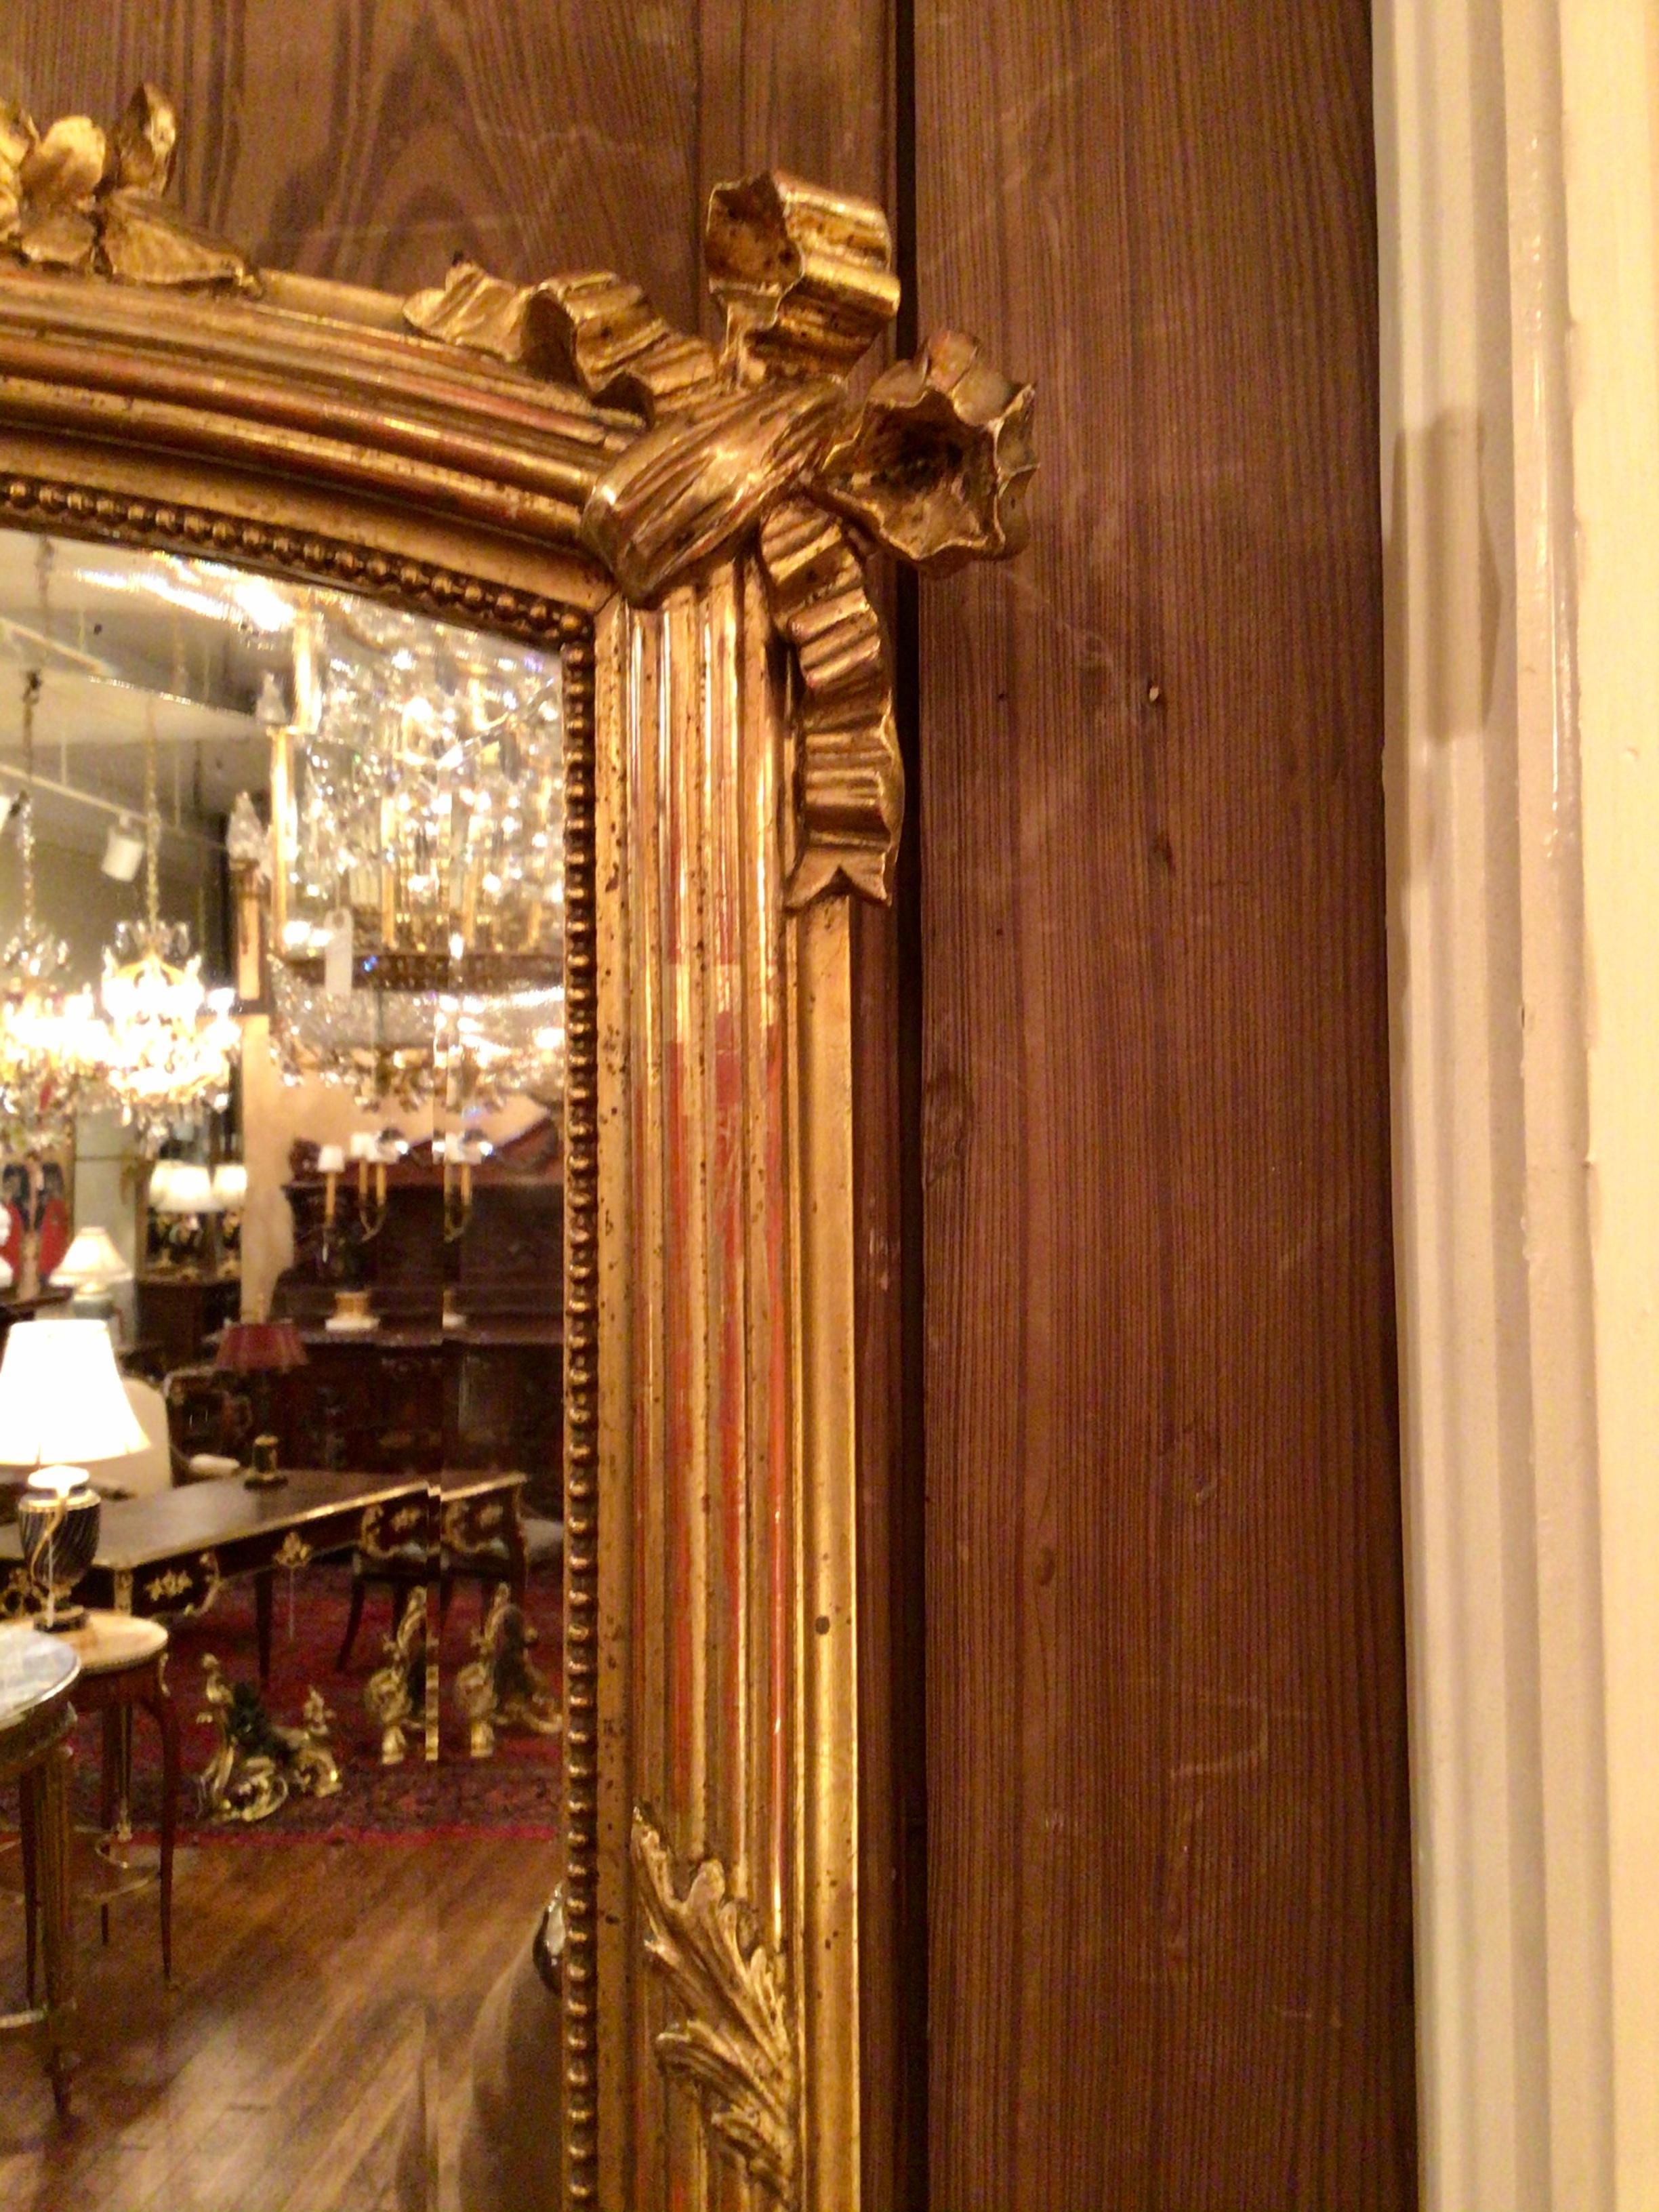 Antique French Louis XVI beveled gilt mirror, circa 1880.
MIR236.